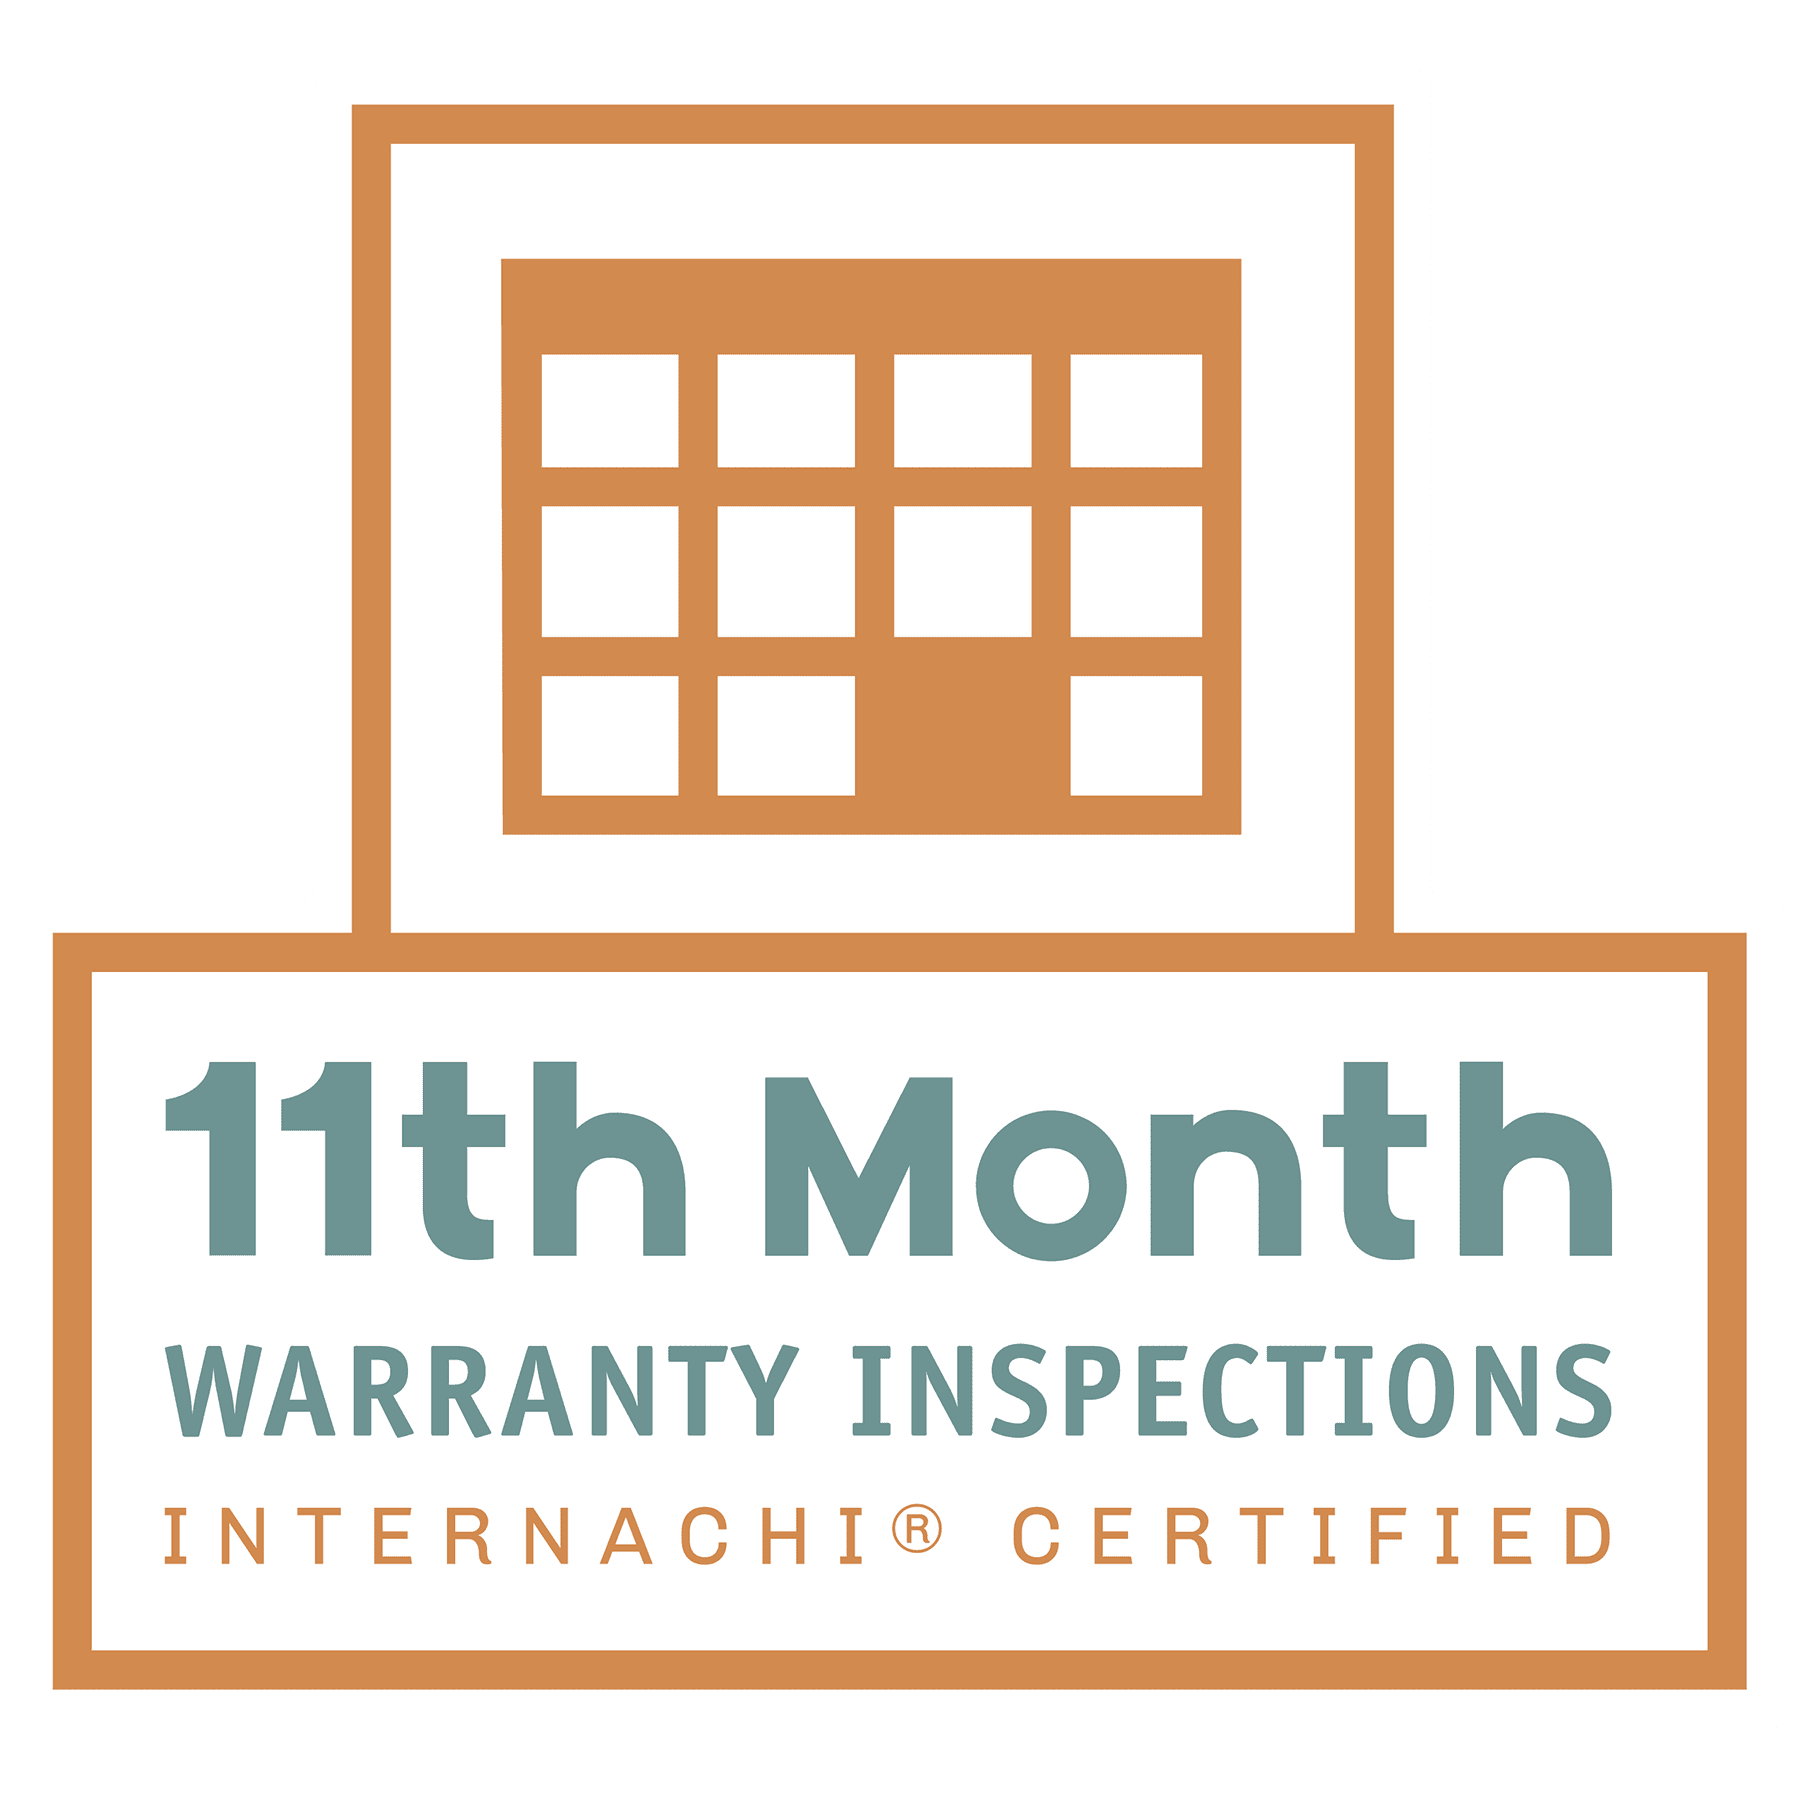 11 month warranty inspection bend oregon - Precision Property Inspection